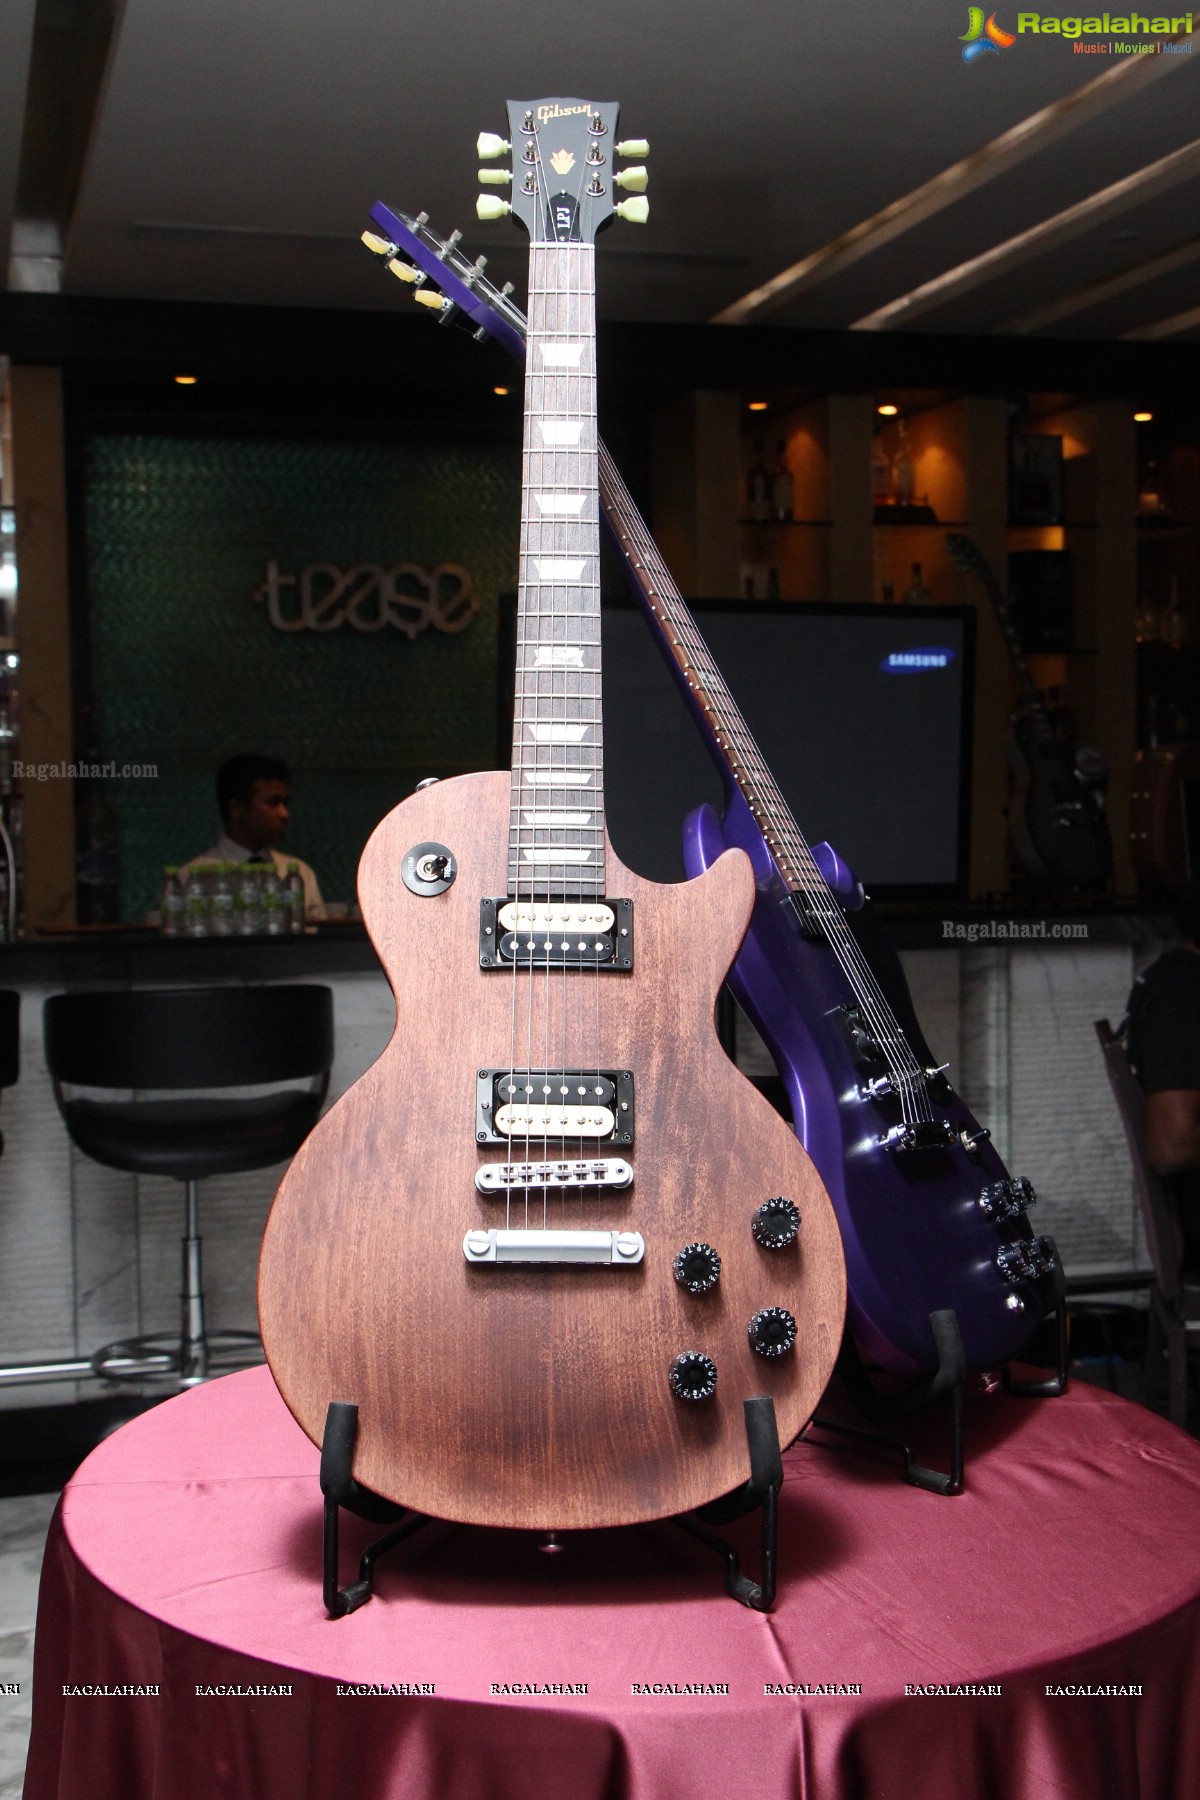 Vivanta by Taj Presents Gibson Through The Lens -  Begumpet, Hyderabad